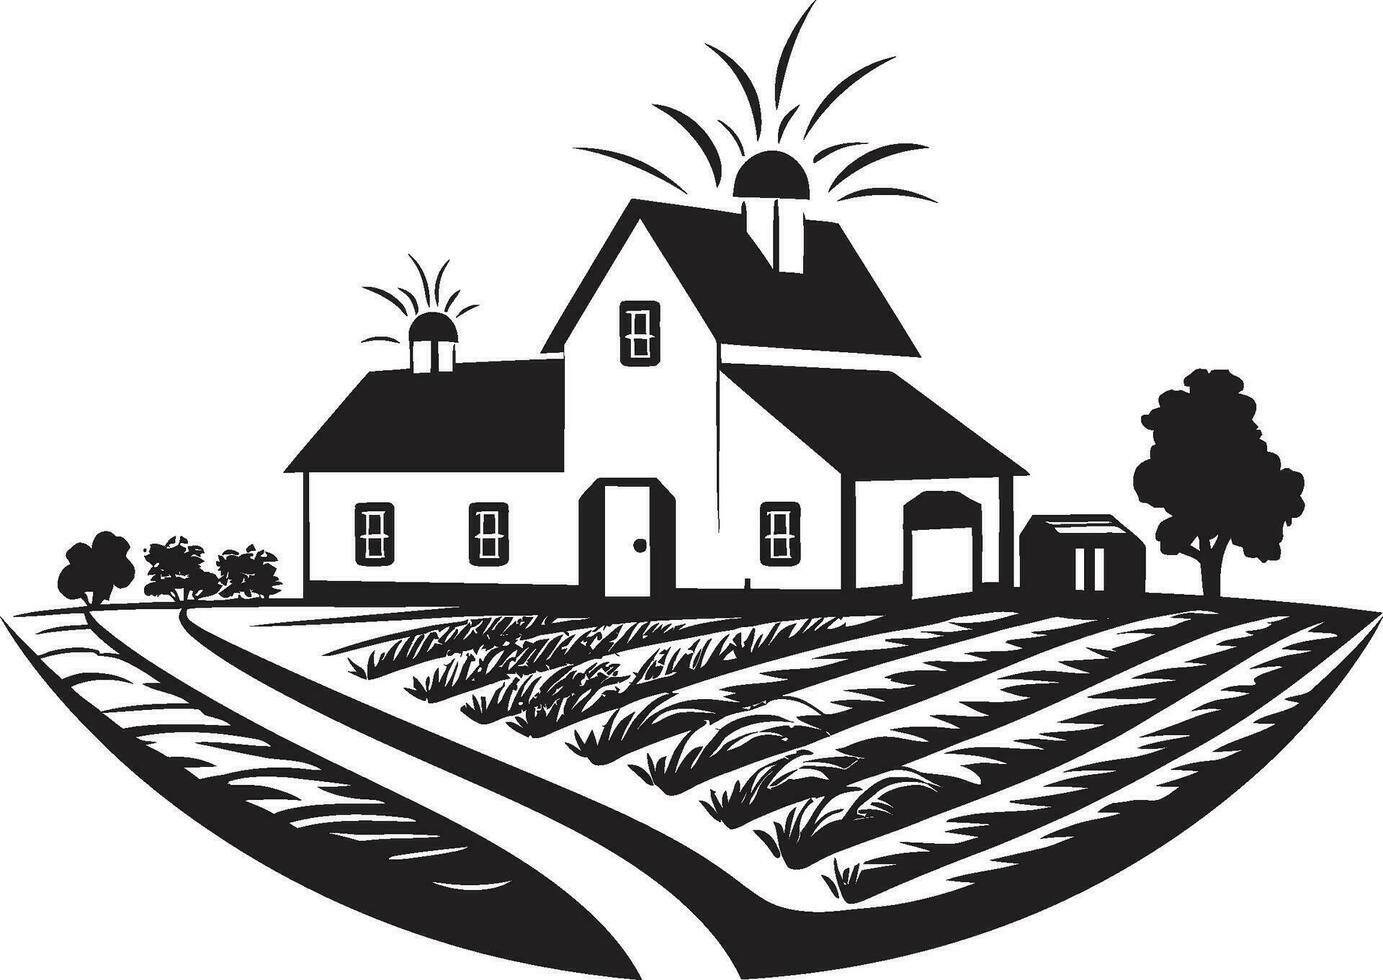 Rustic Farm Abode Mark Farmers House Vector Logo Rural Dwelling Impression Farmhouse Design in Vector Icon